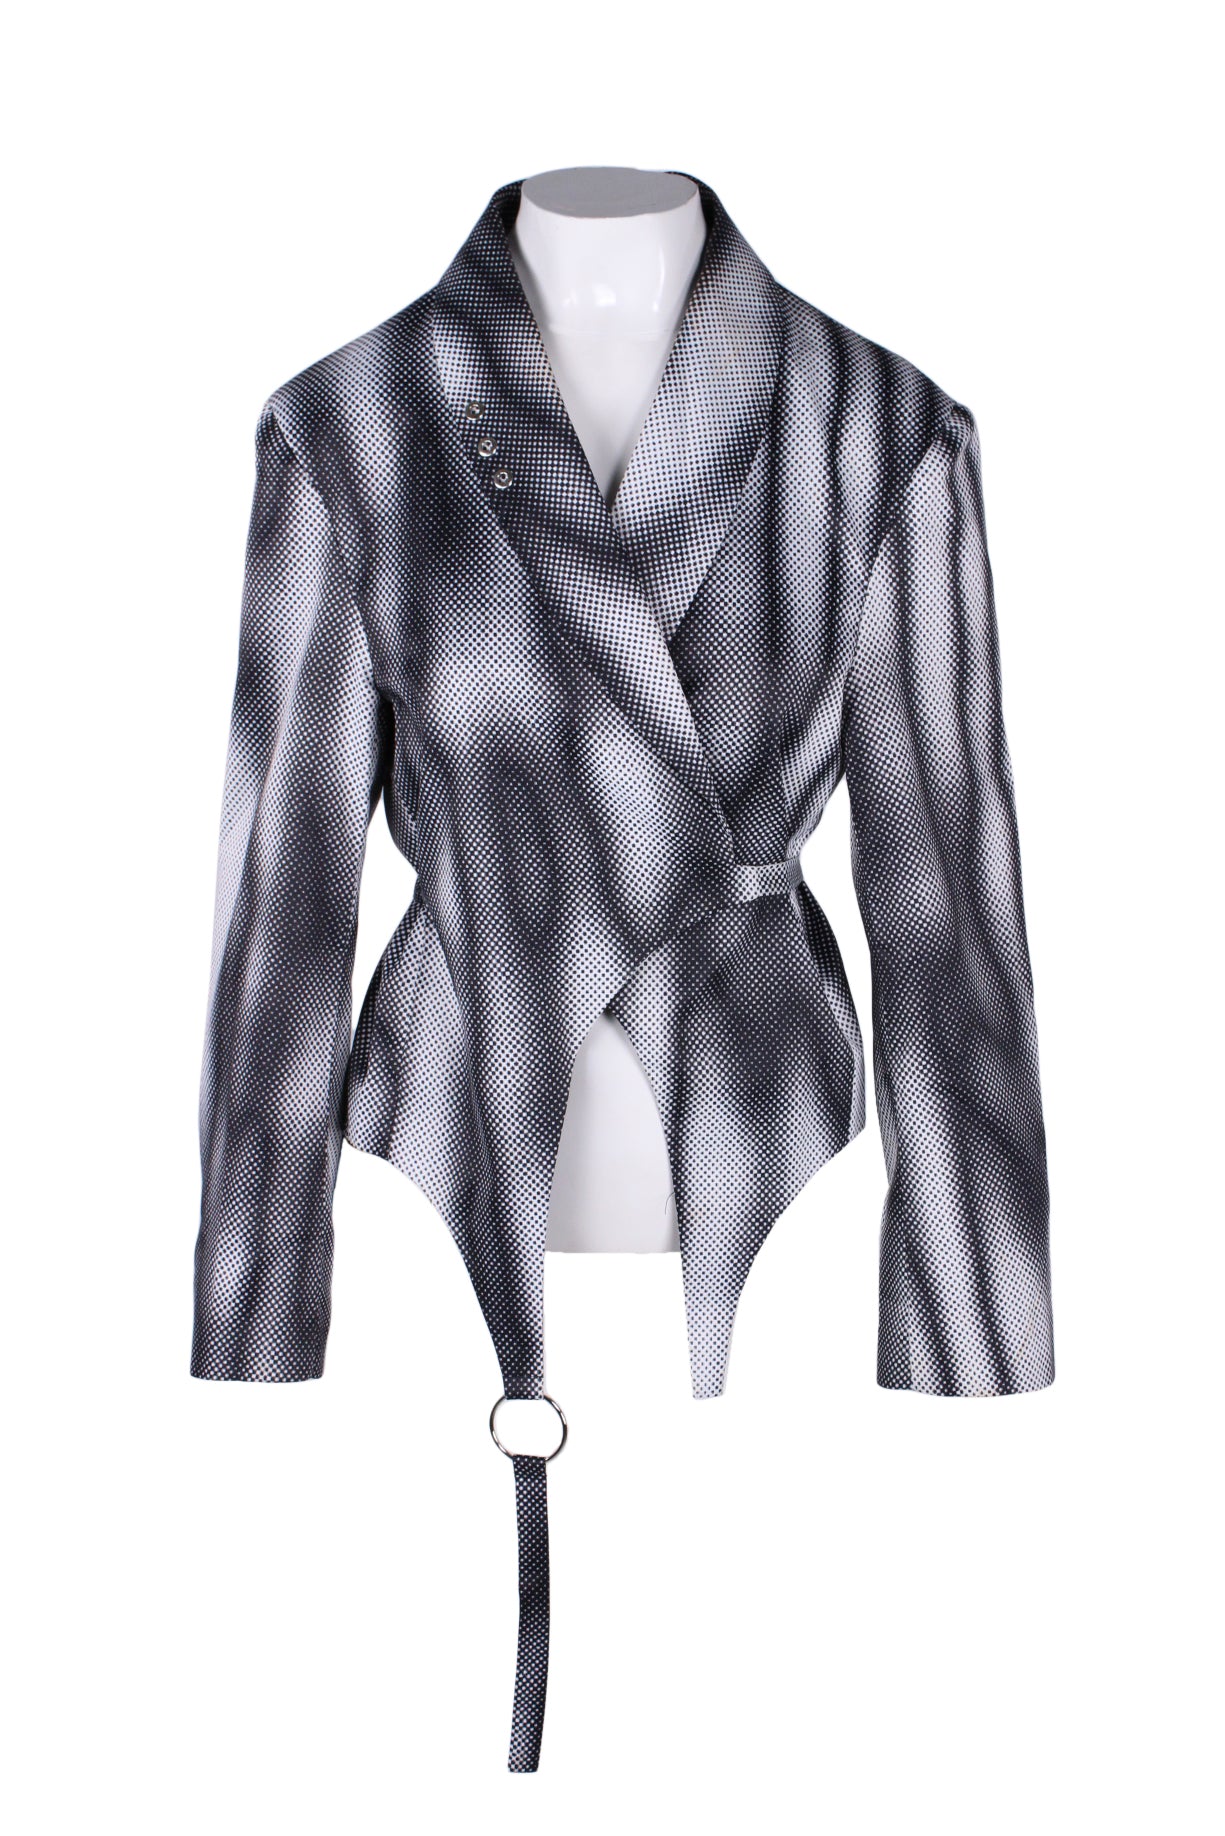 description: tilt knees abstract black and white blazer. features collar, wrap closure, and conceptual silhouette. 